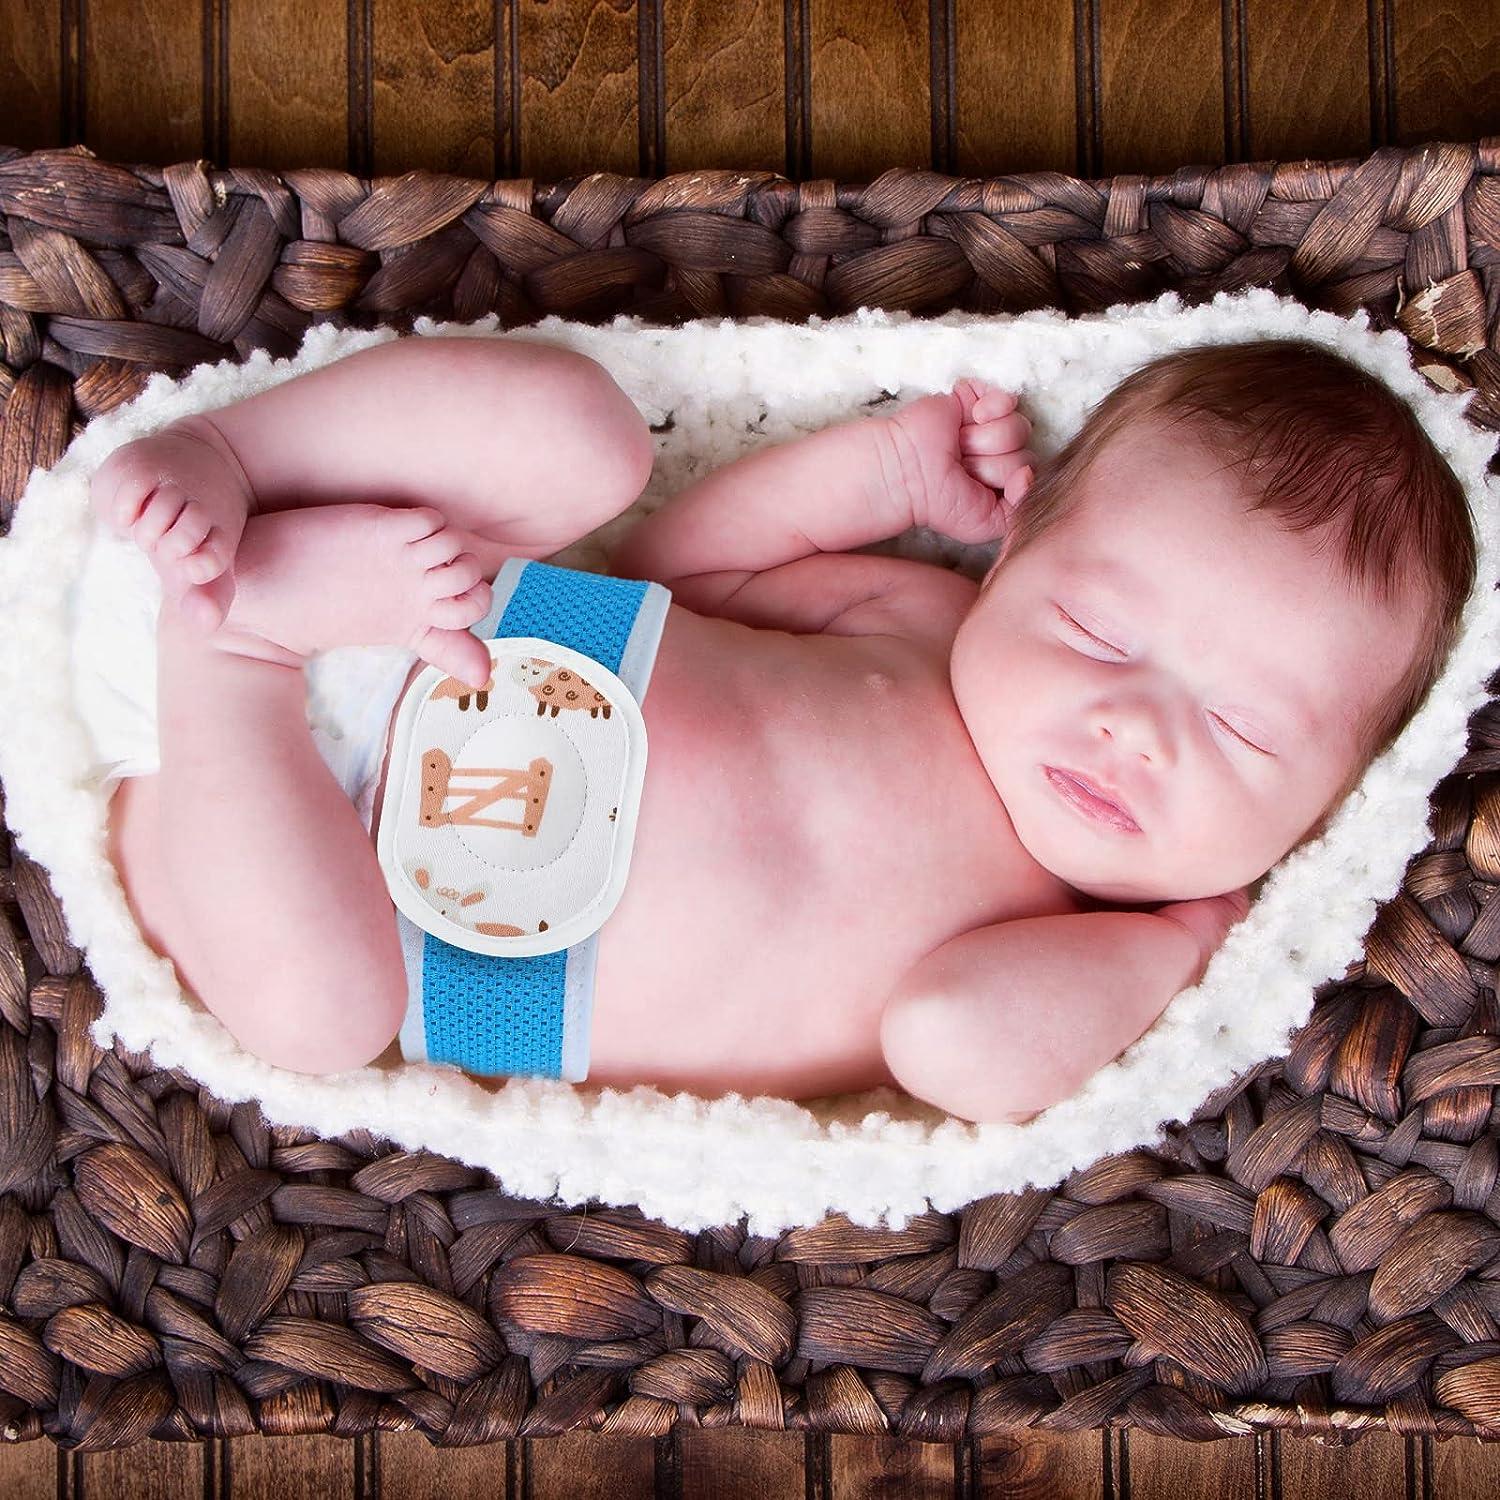 Umbilical Hernia Belt Baby Belly Button Band Infant Belly Wrap Truss  Abdominal Binder for Children Kids Support Adjustable Navel Belly Band  Newborn